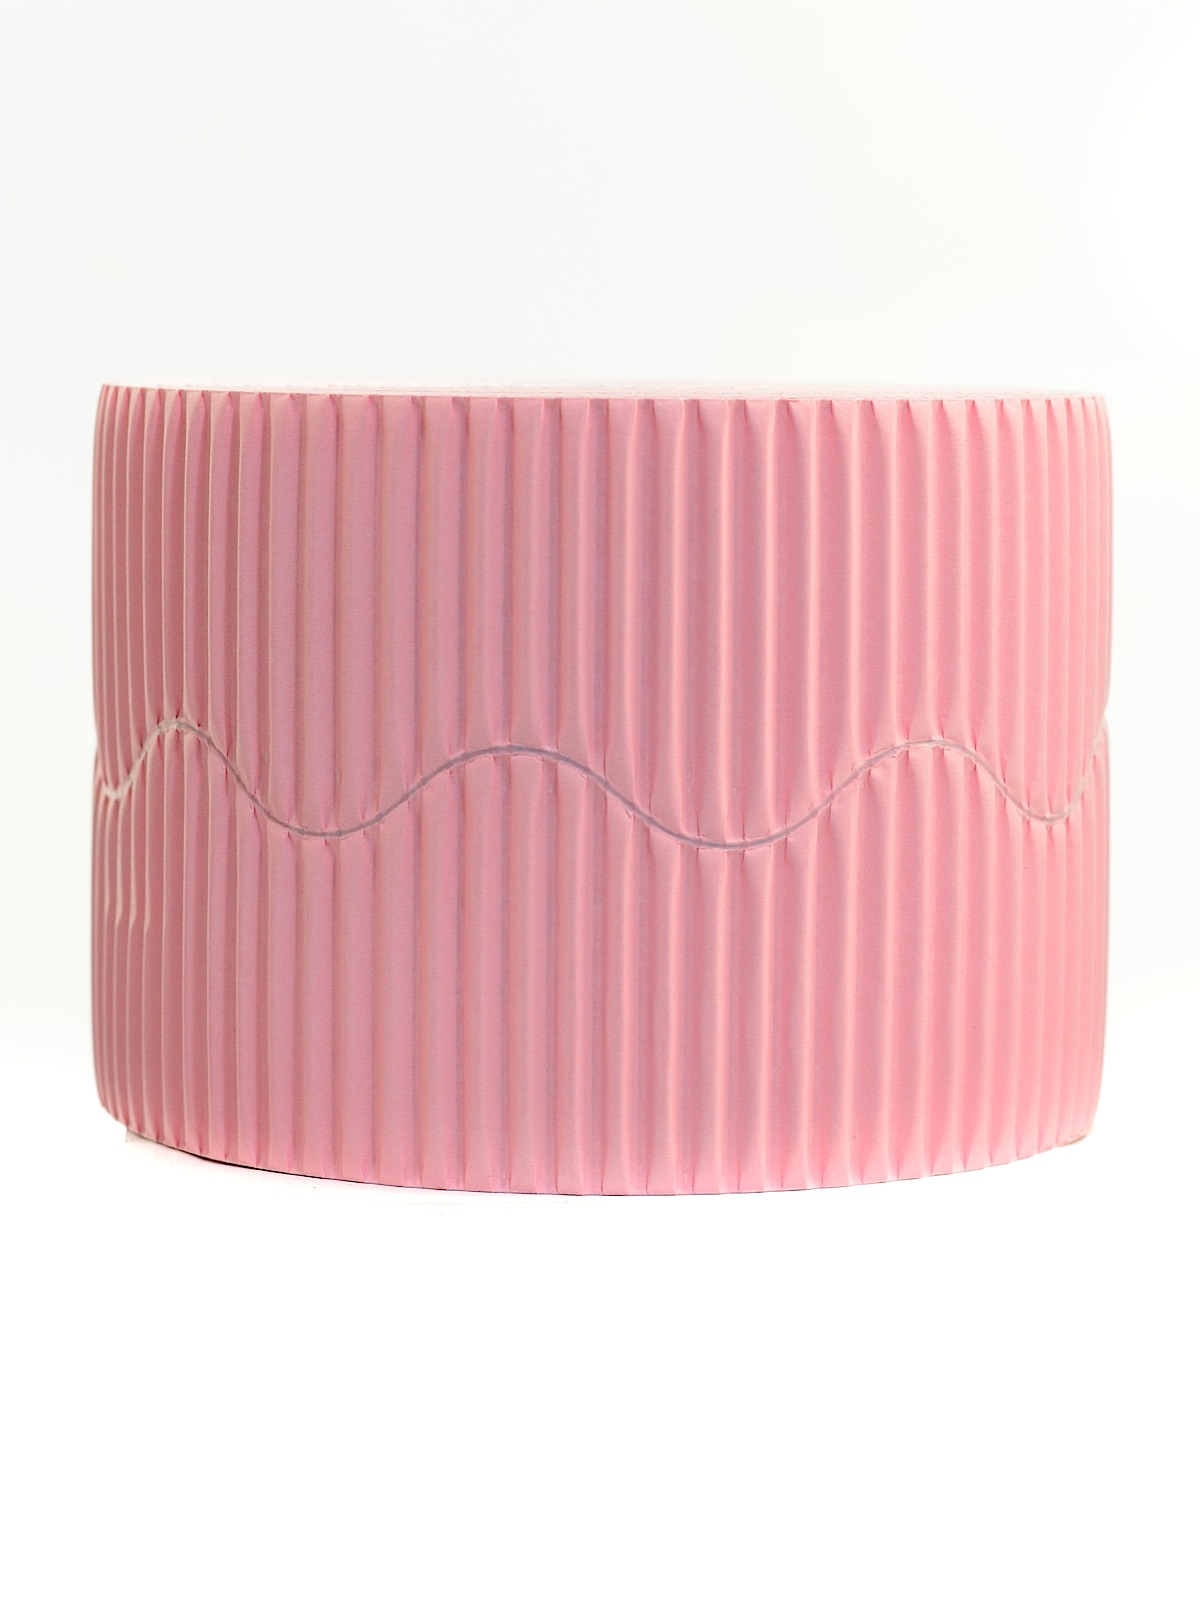 Bordette Corrugated Roll Pink